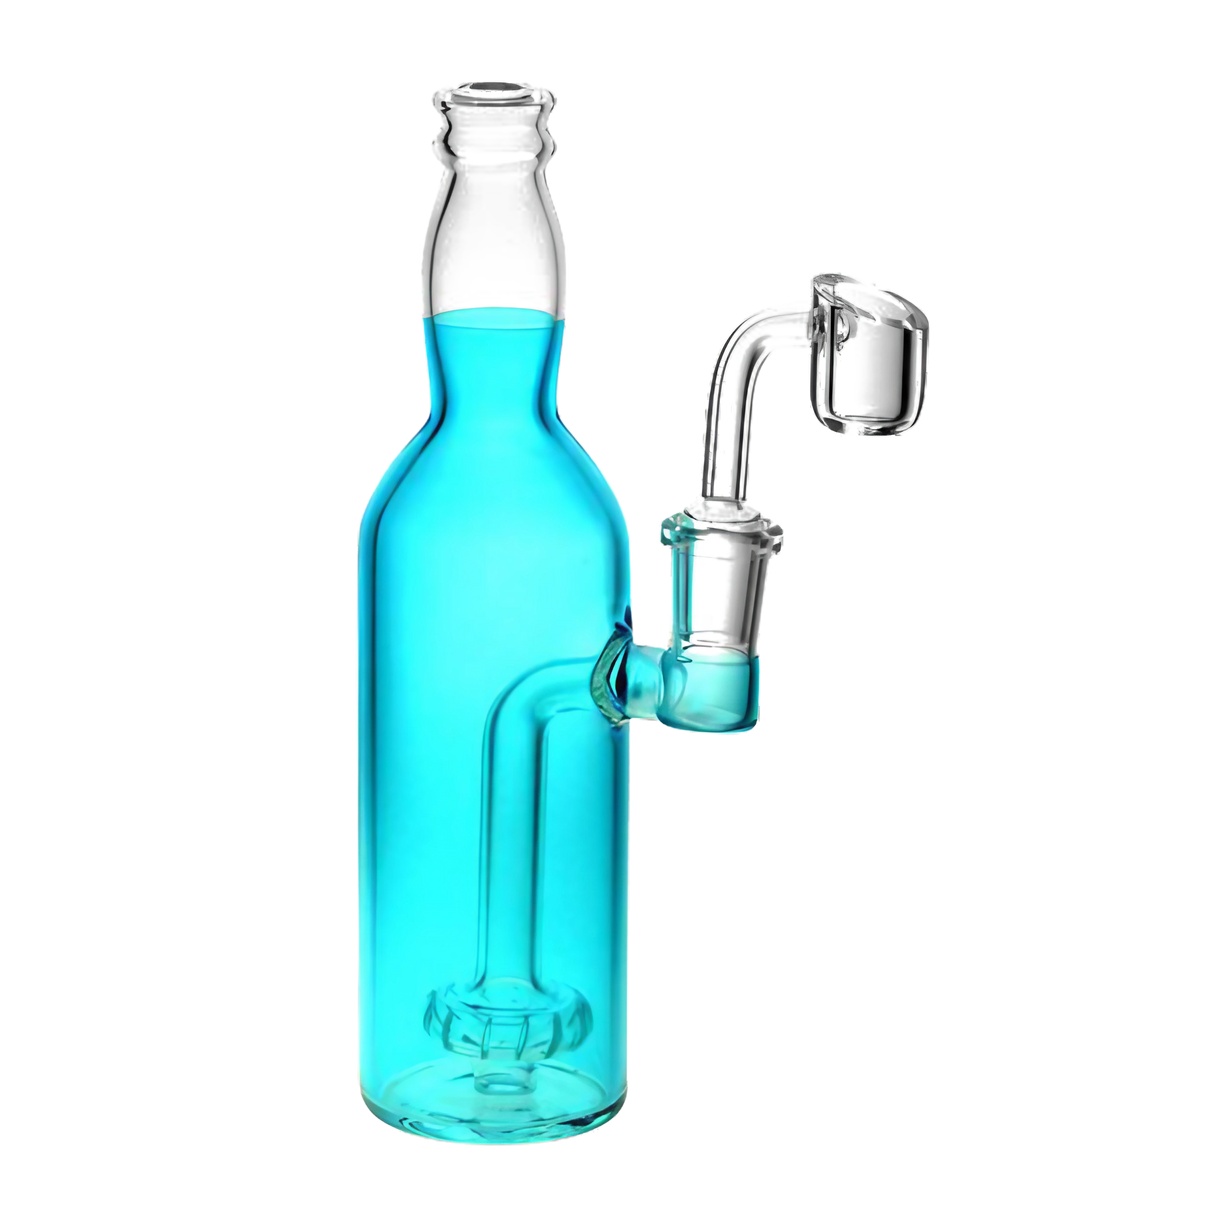 Bright blue soda bottle-shaped borosilicate glass dab rig with quartz banger, side view